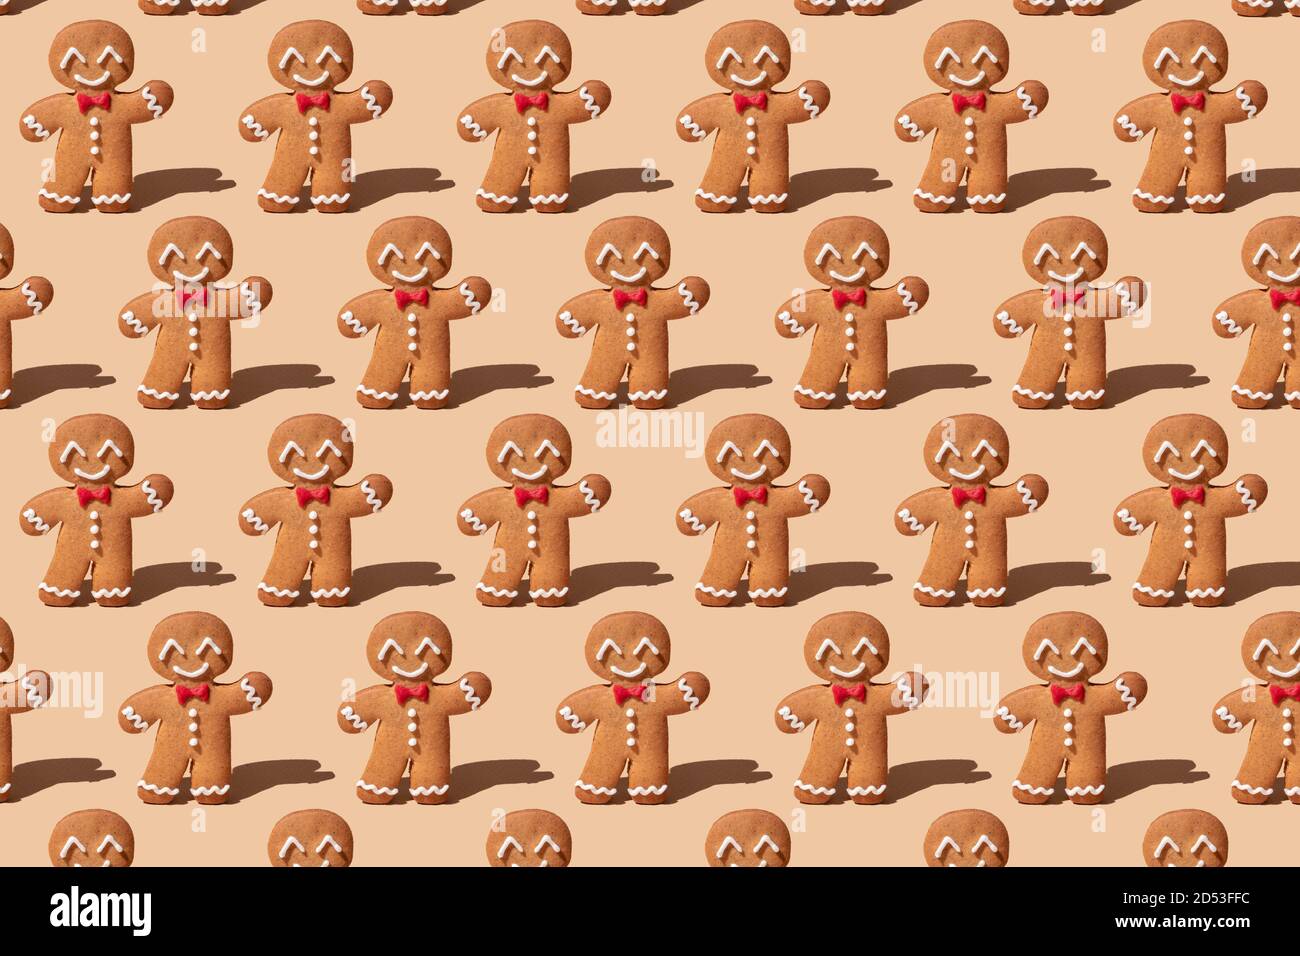 Cute Gingerbread man pattern Stock Photo